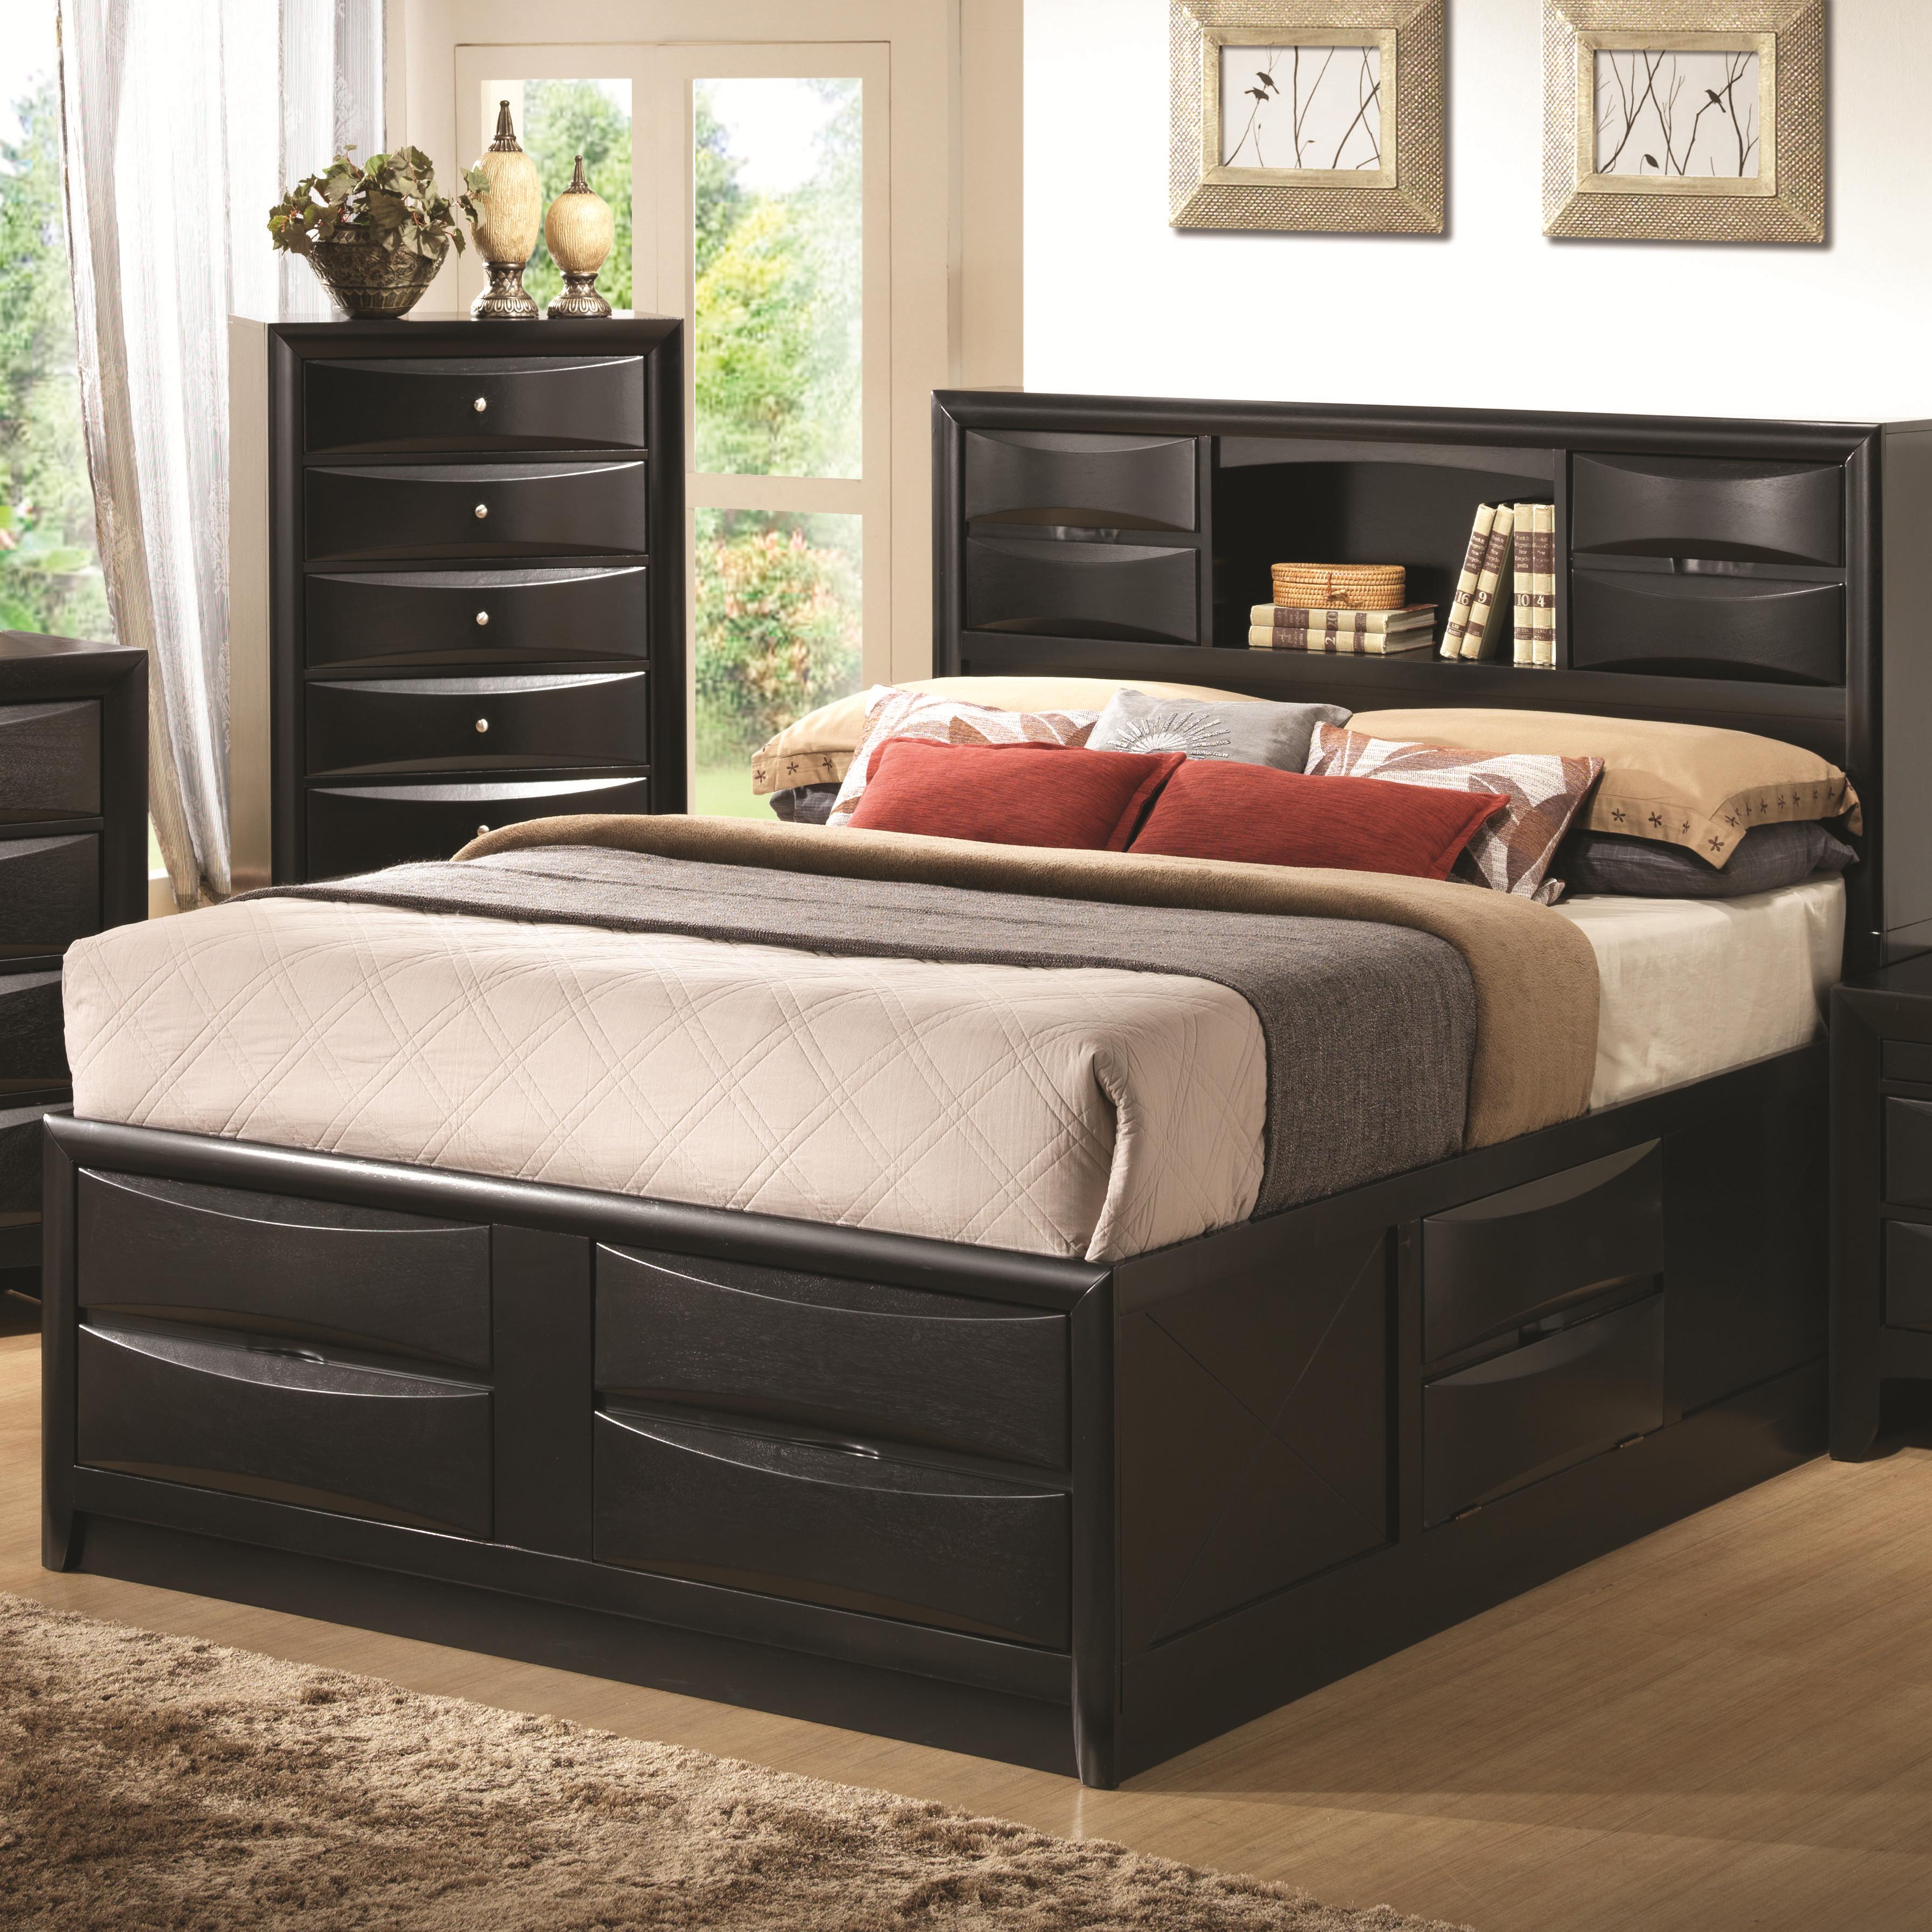 king storage bed with bookcase headboard coaster briana california king storage bed - item number: 202701kw JDLAHJZ